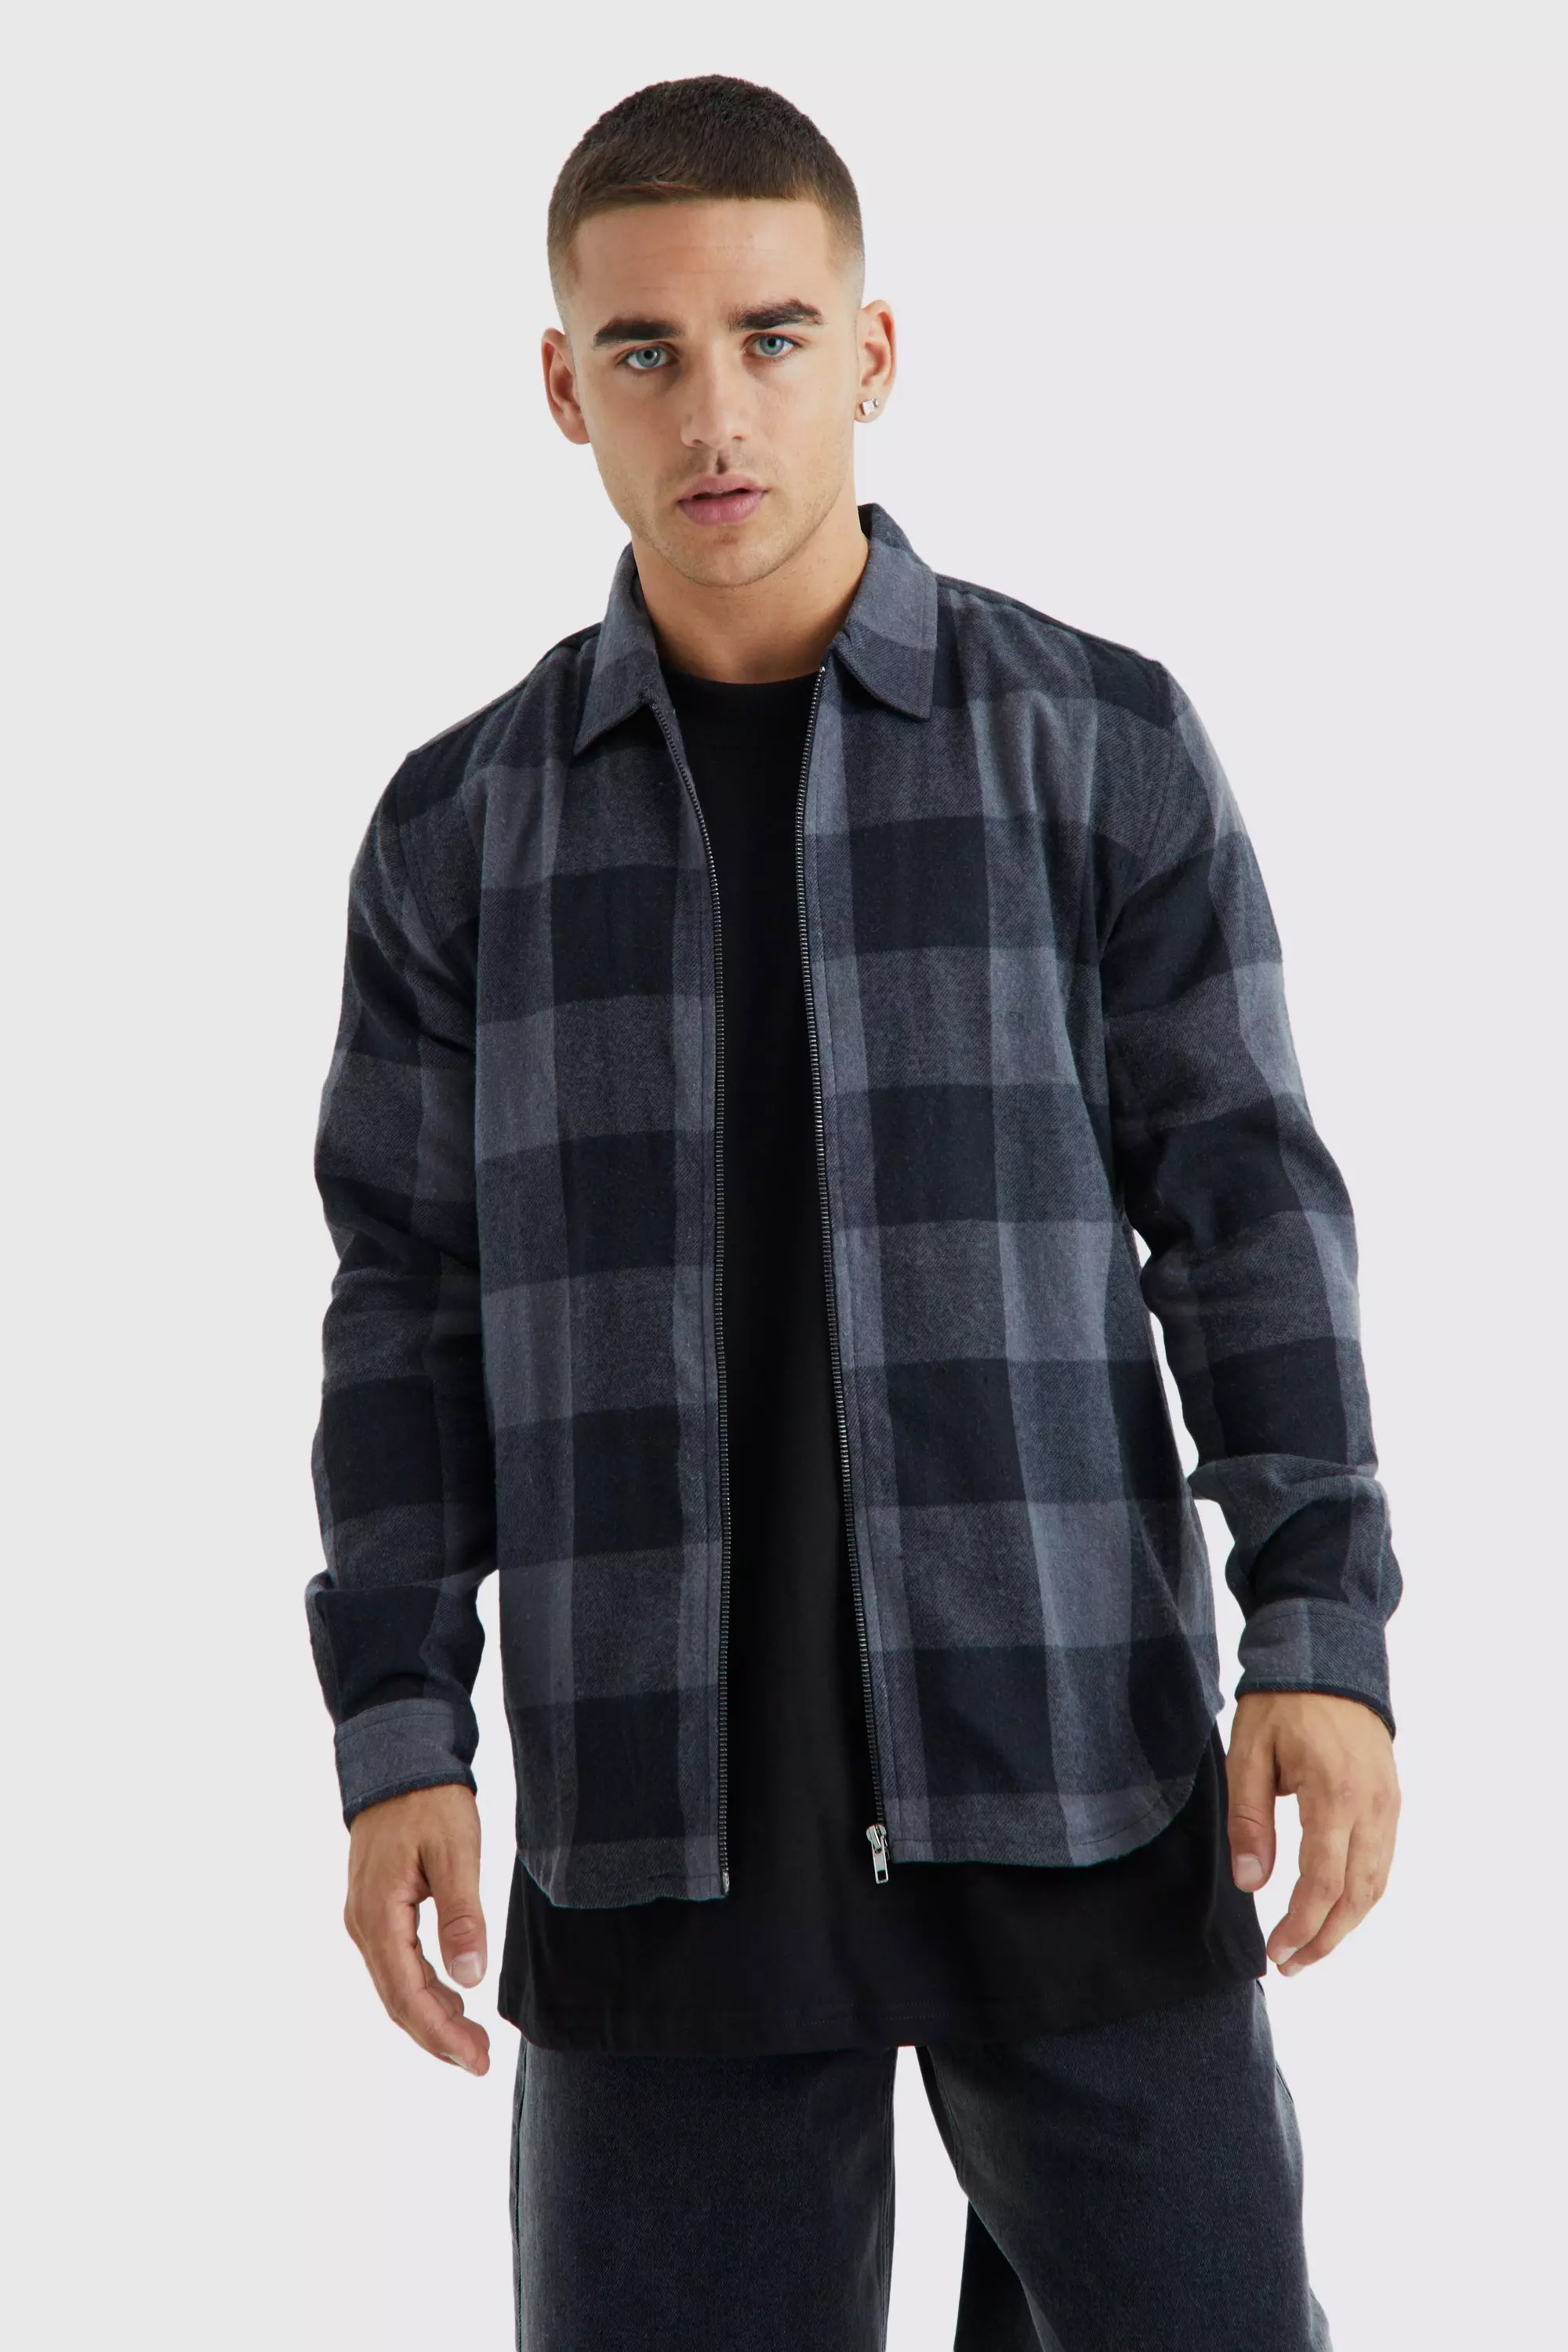 Longsleeve Check Flannel Zip Overshirt Charcoal